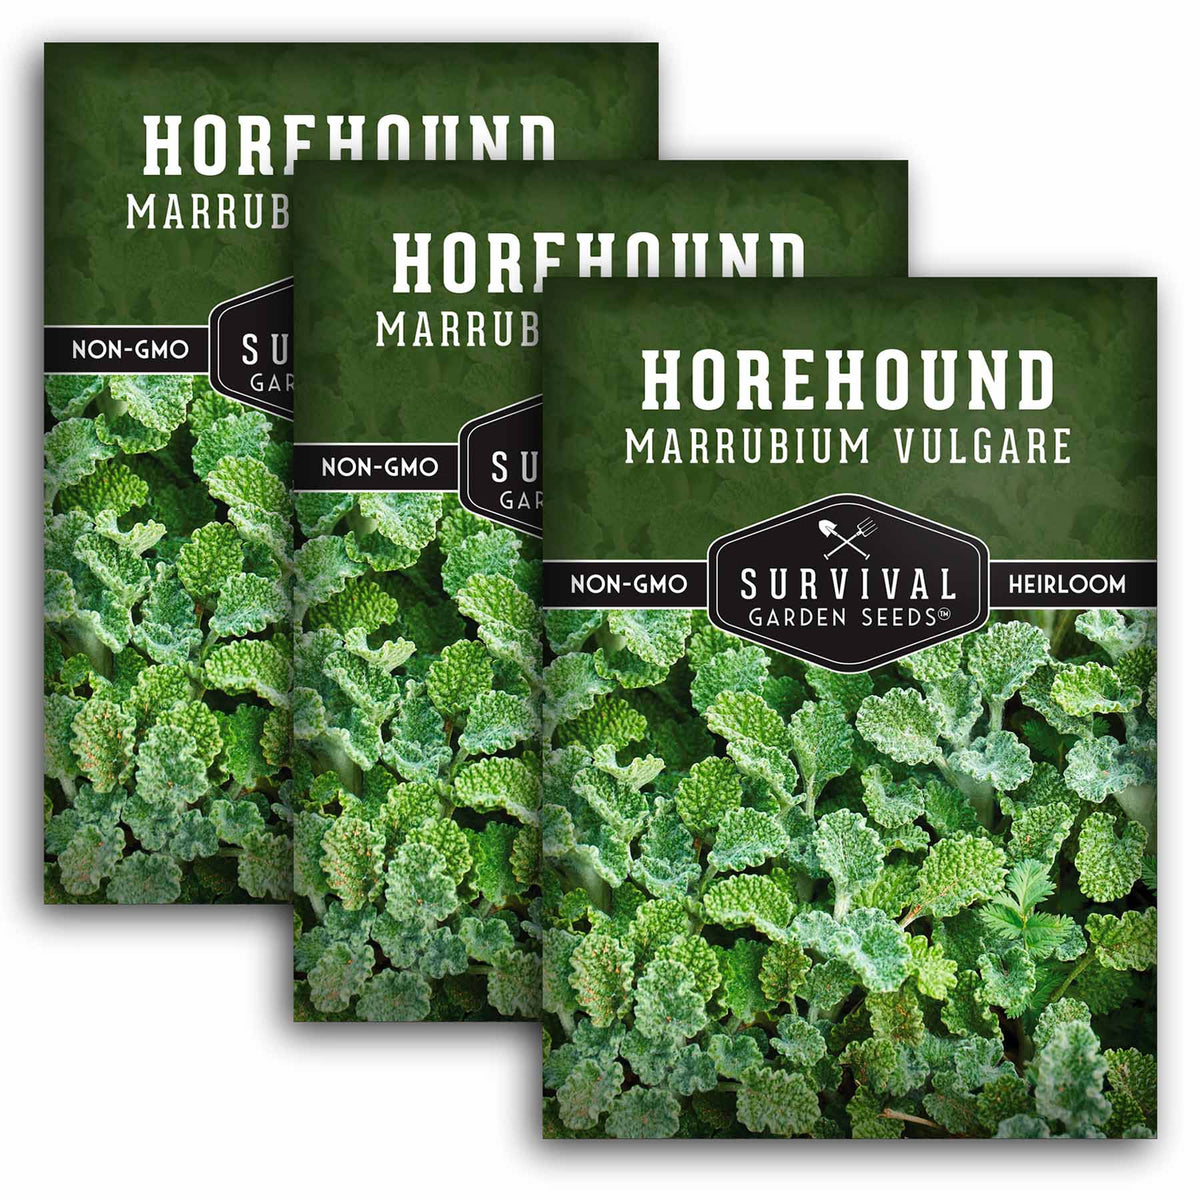 3 packet of Horehound seeds